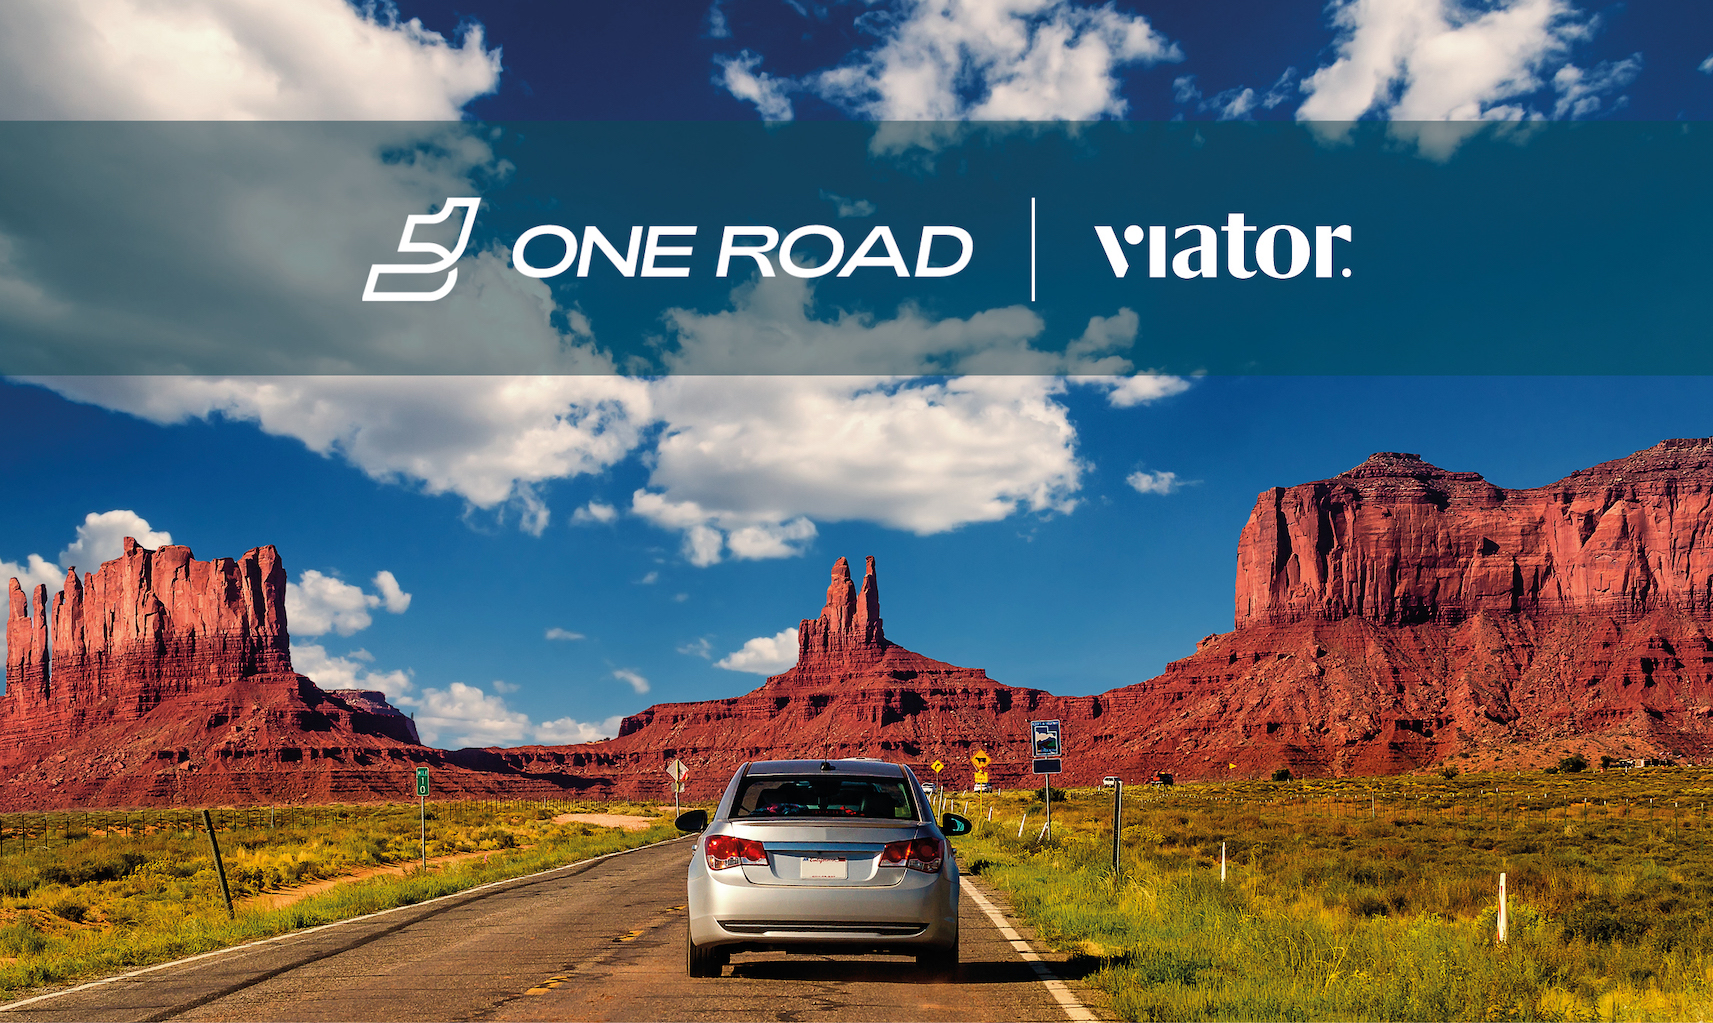 Viator Joins FIA-Led One Road Programme as a Global Partner